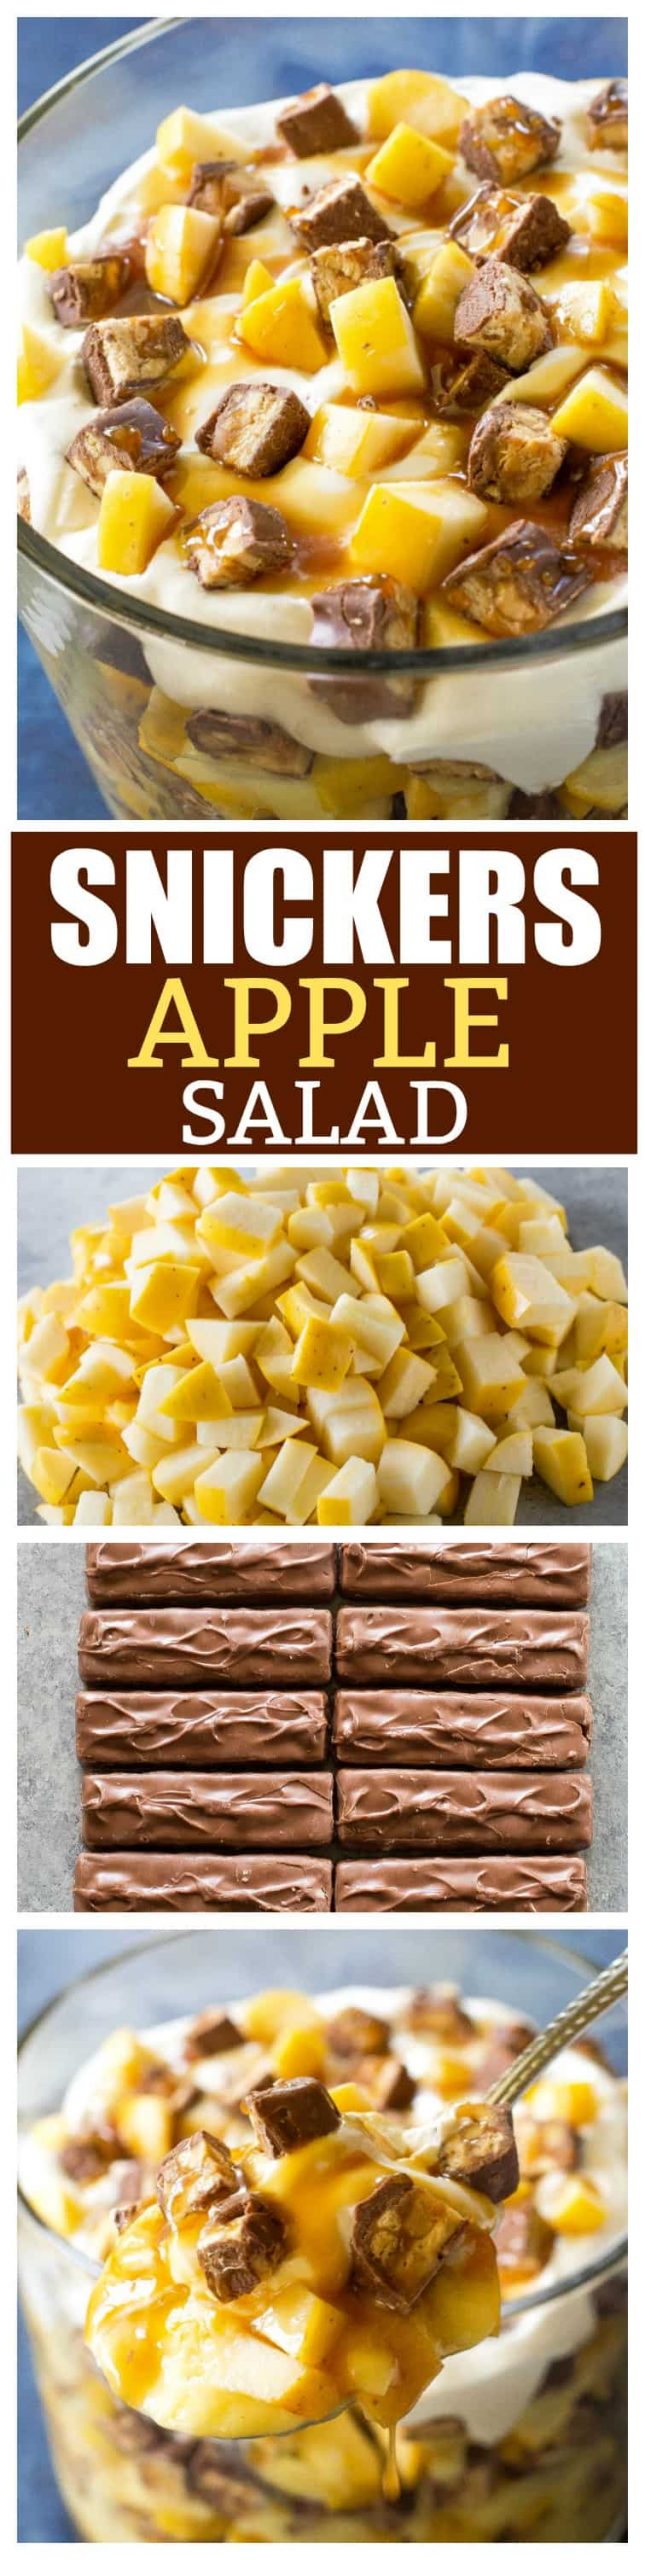 snickers apple salad